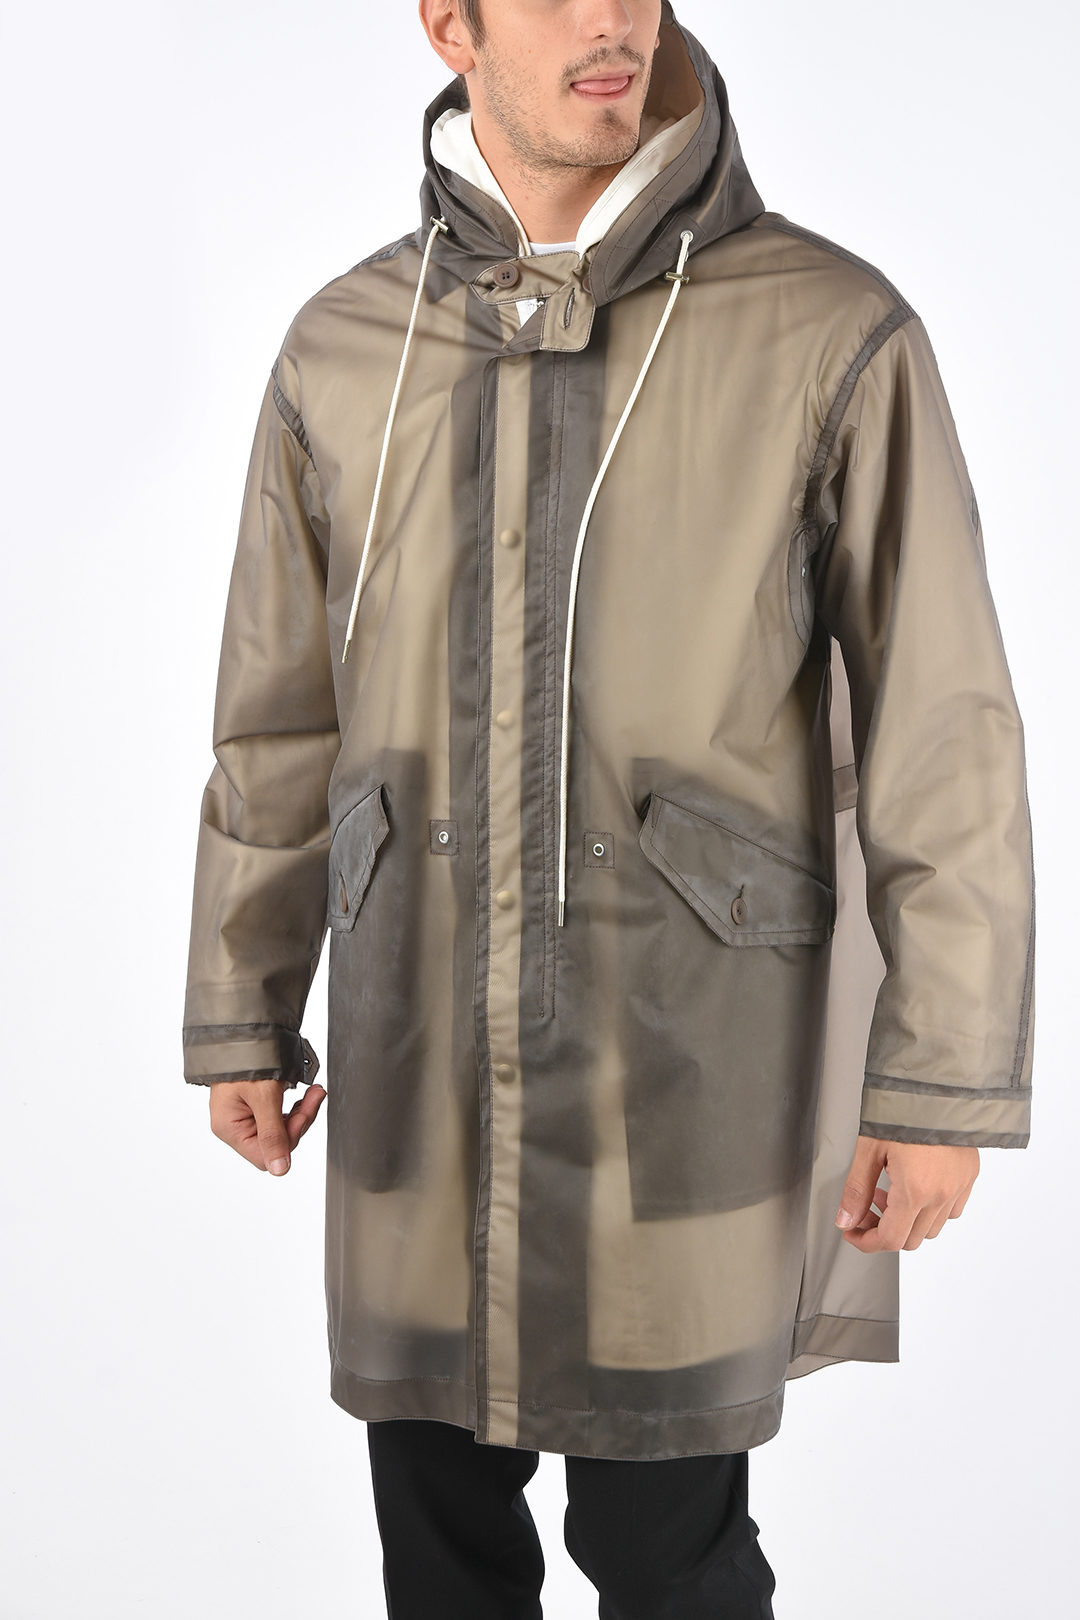 Gezichtsveld Bijproduct Kampioenschap Helmut Lang Removable Raincoat Over-Sized Parka men - Glamood Outlet